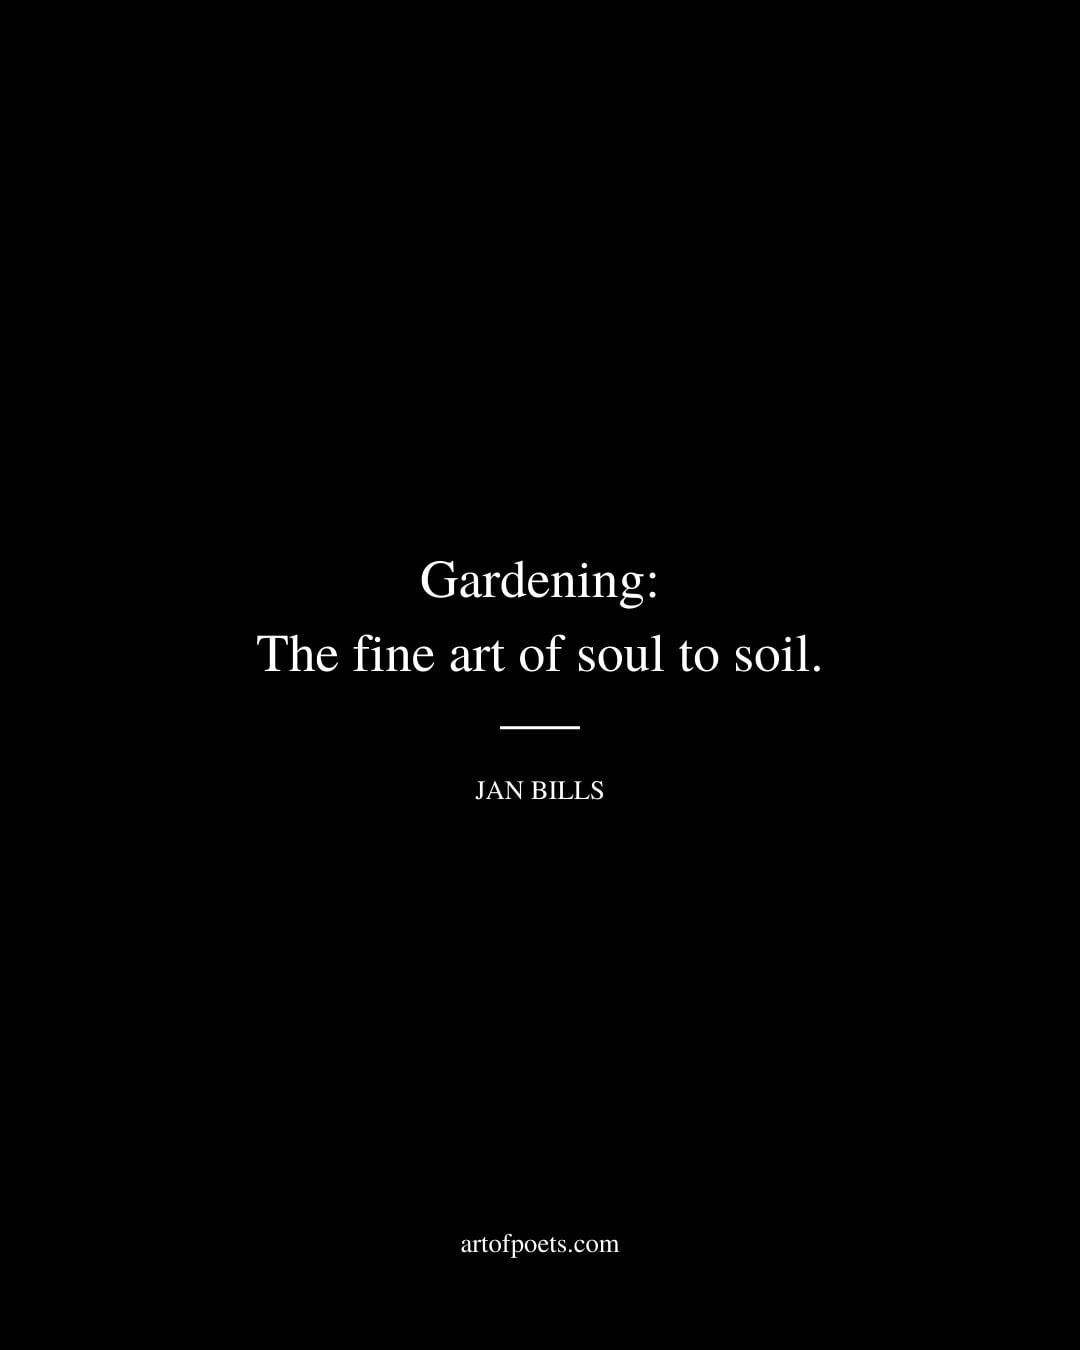 Gardening The fine art of soul to soil. Jan Bills